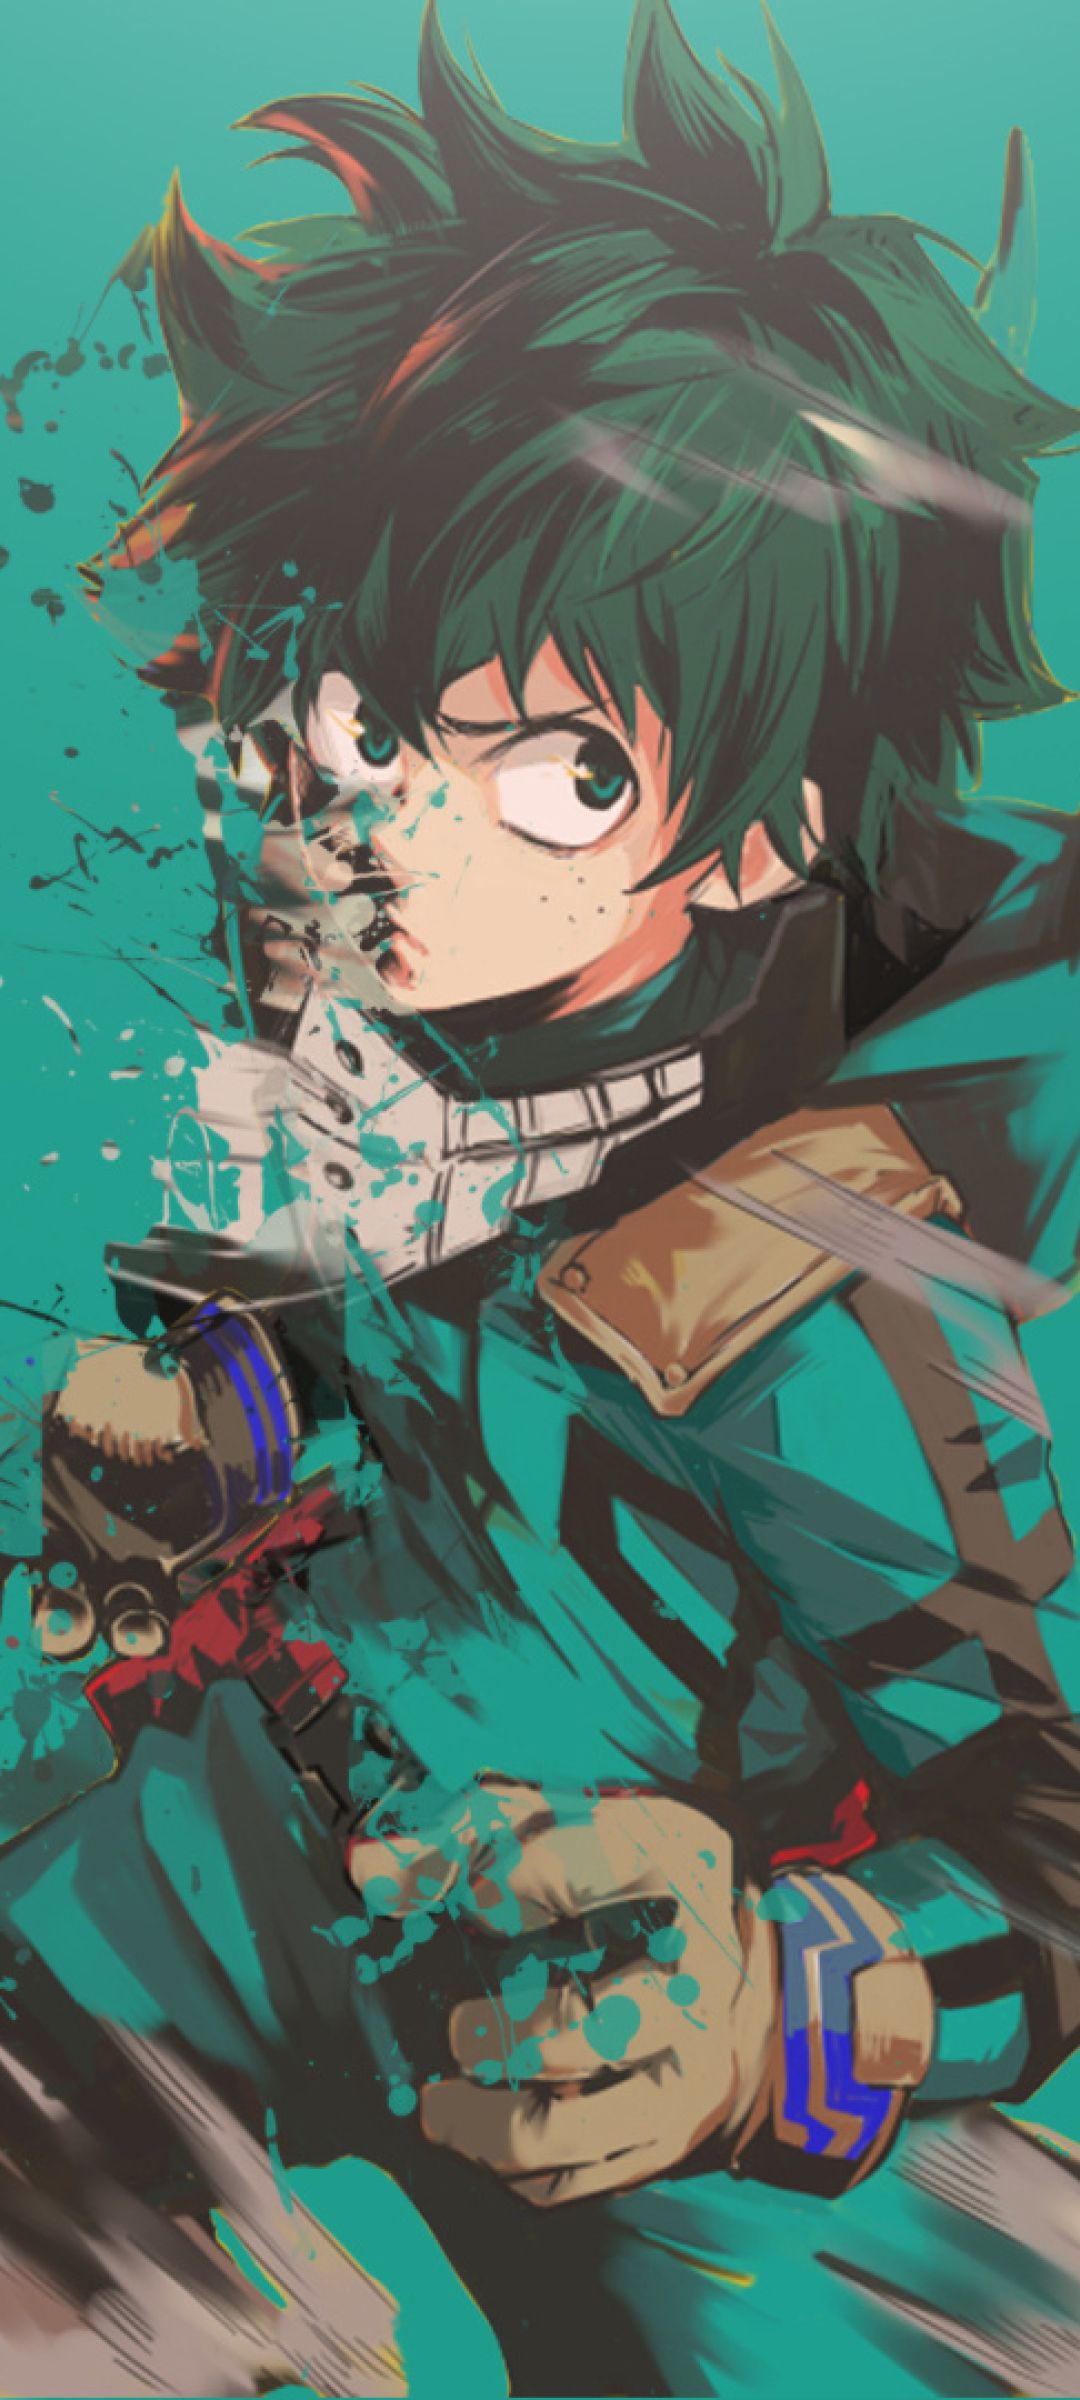 Boku no Hero Academia Midoriya Izuku Art 1080x2400 Resolution Wallpaper, HD Anime 4K Wallpaper, Image, Photo and Background